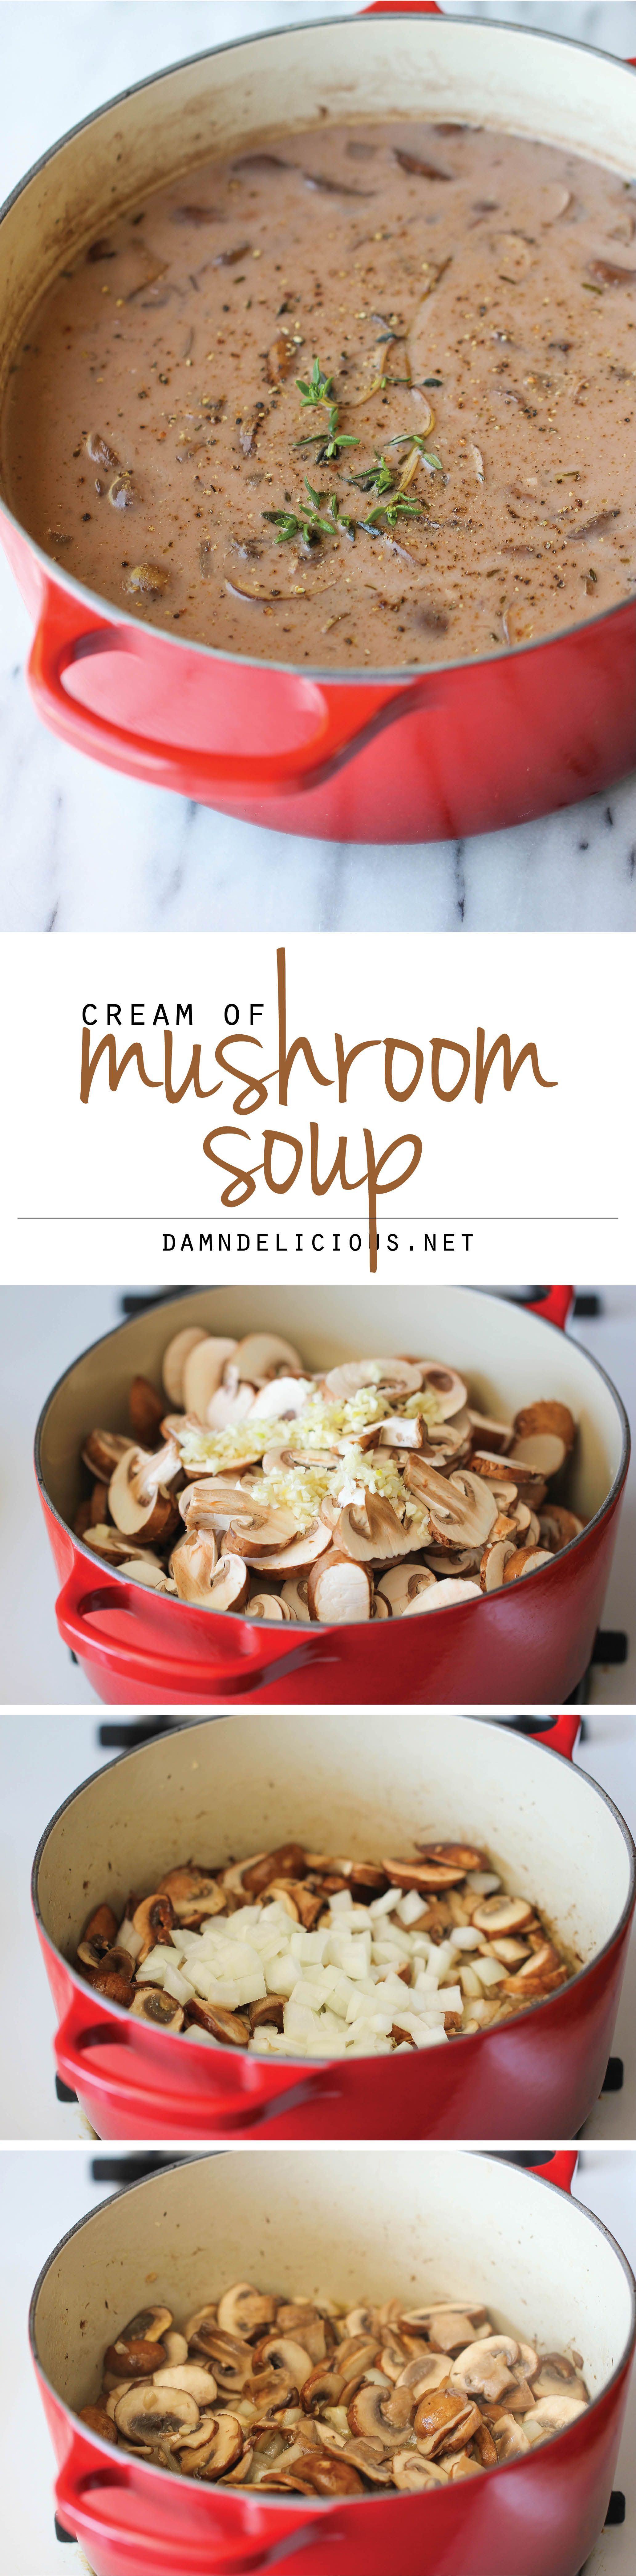 Homemade Cream of Mushroom Soup – The creamiest mushroom soup that tastes like t